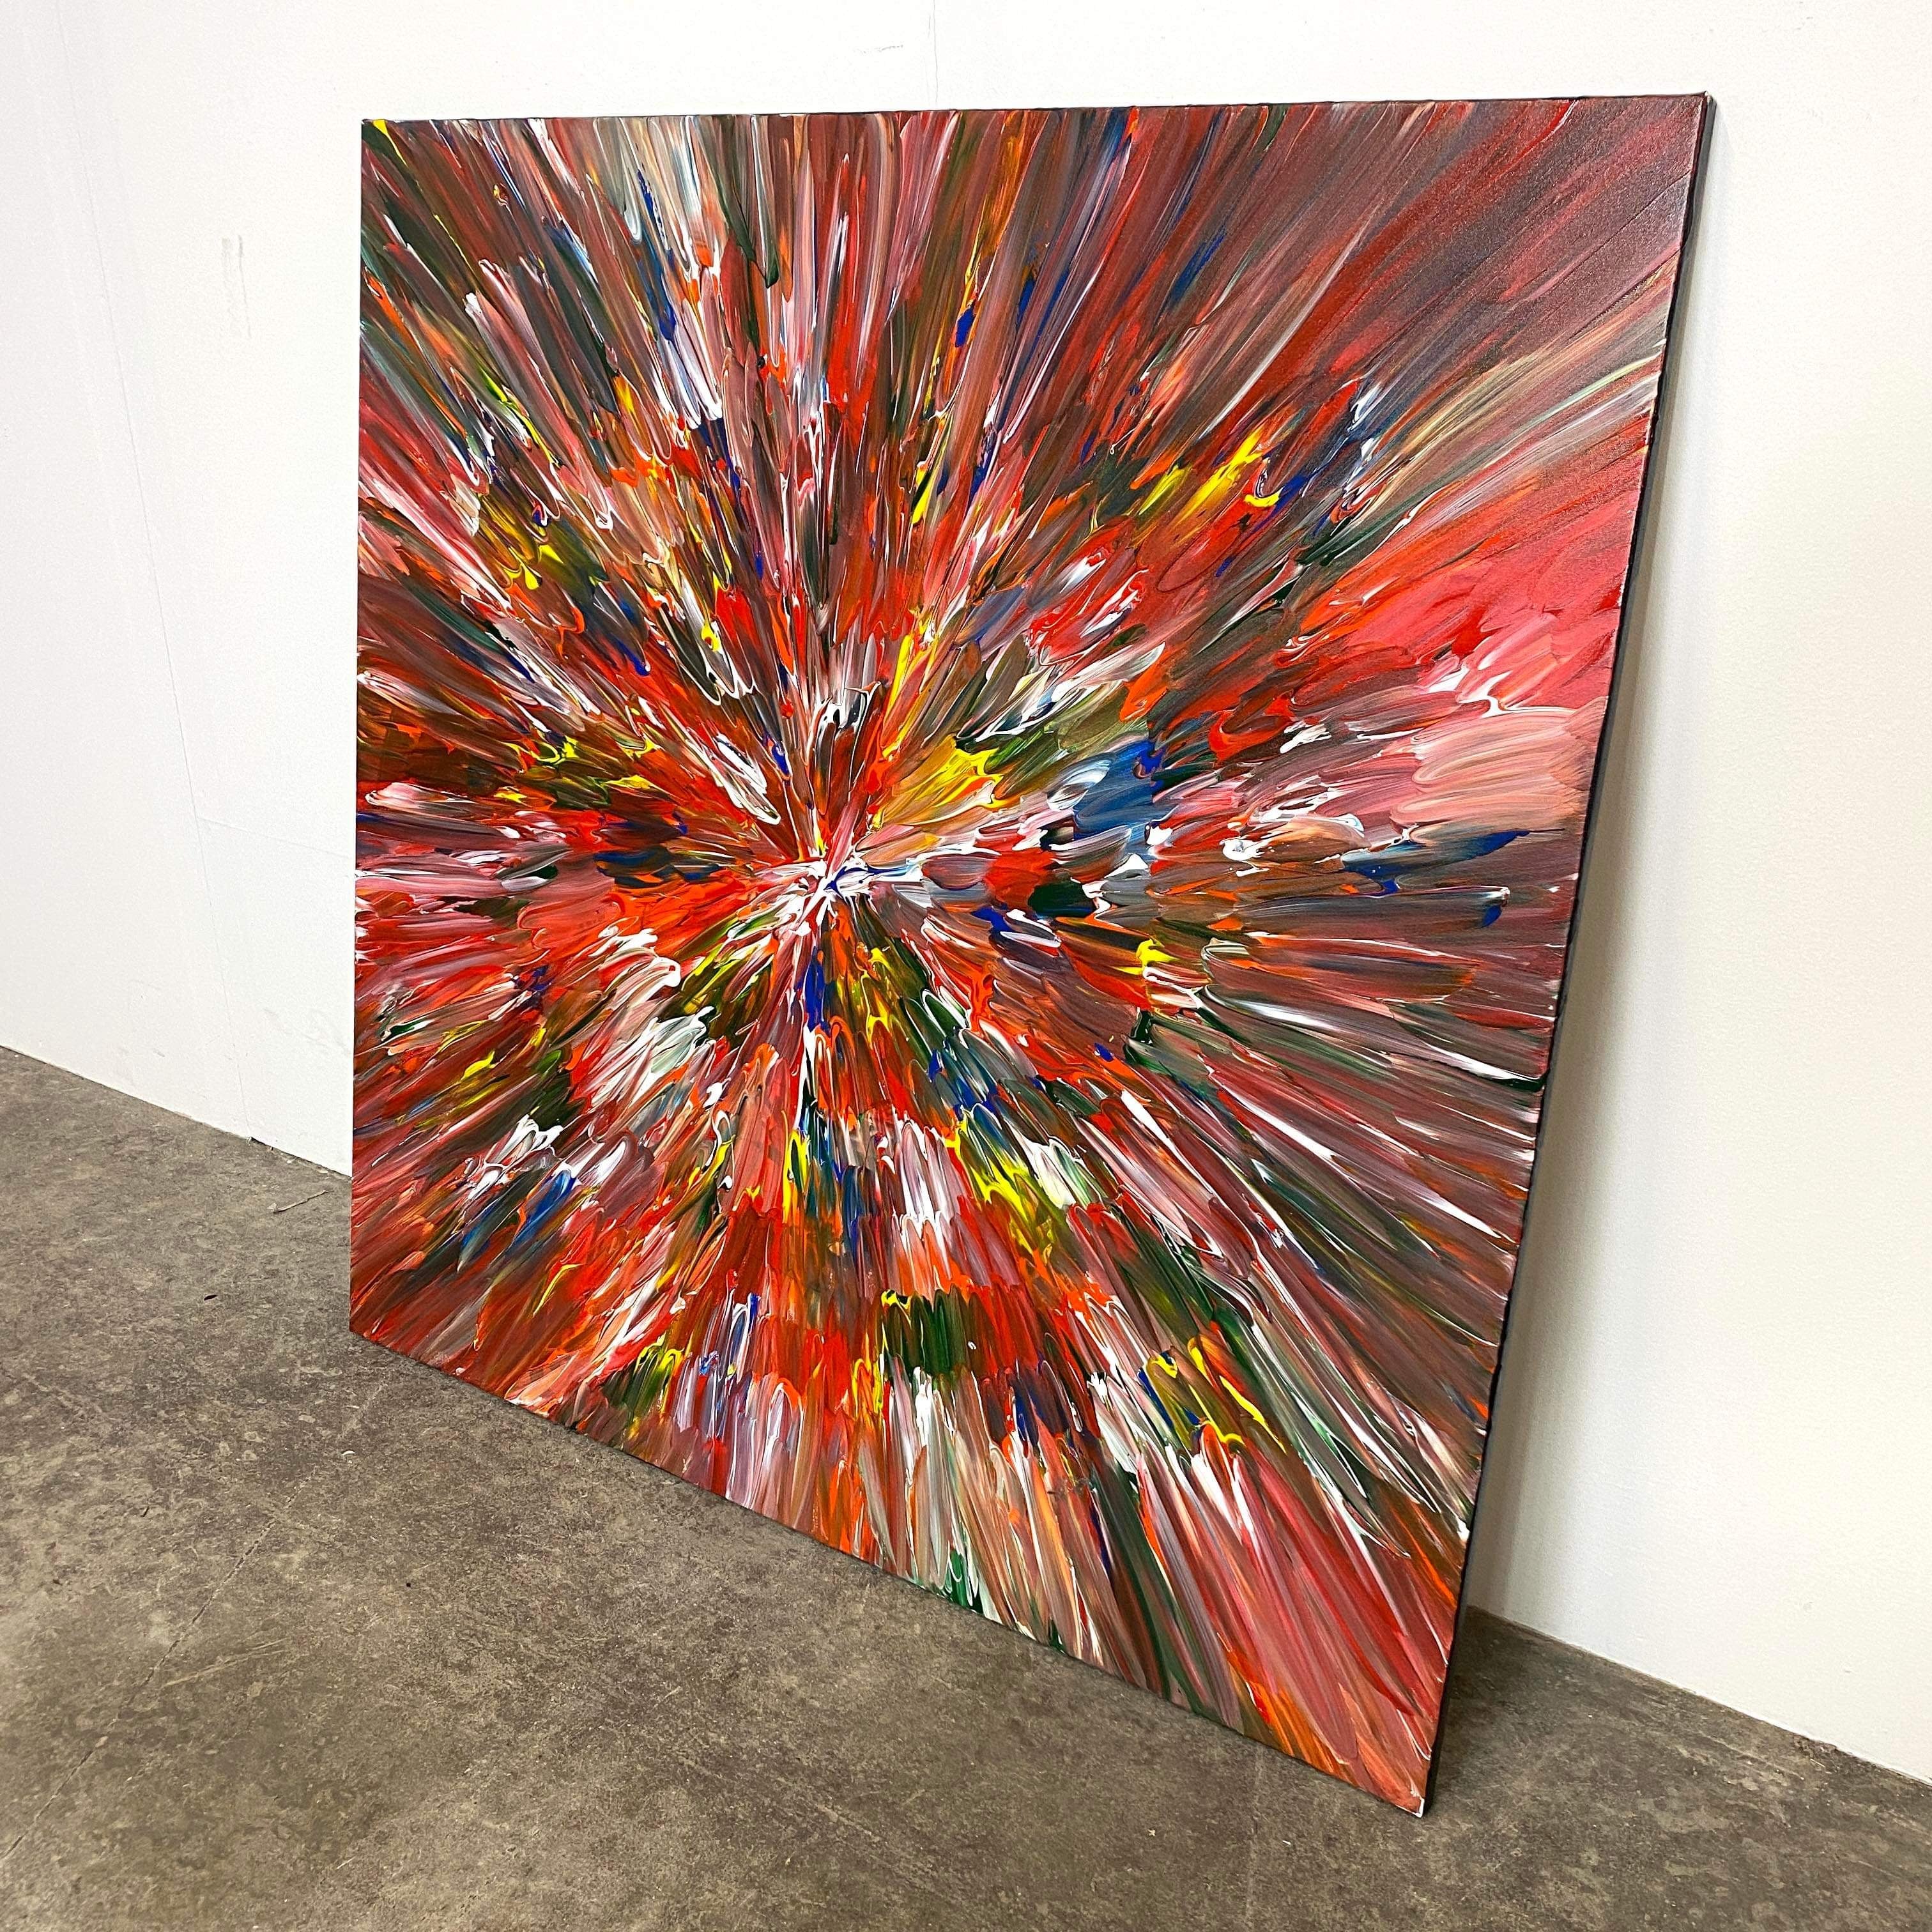 Painting: "I love it #26" 100 x 100 cm